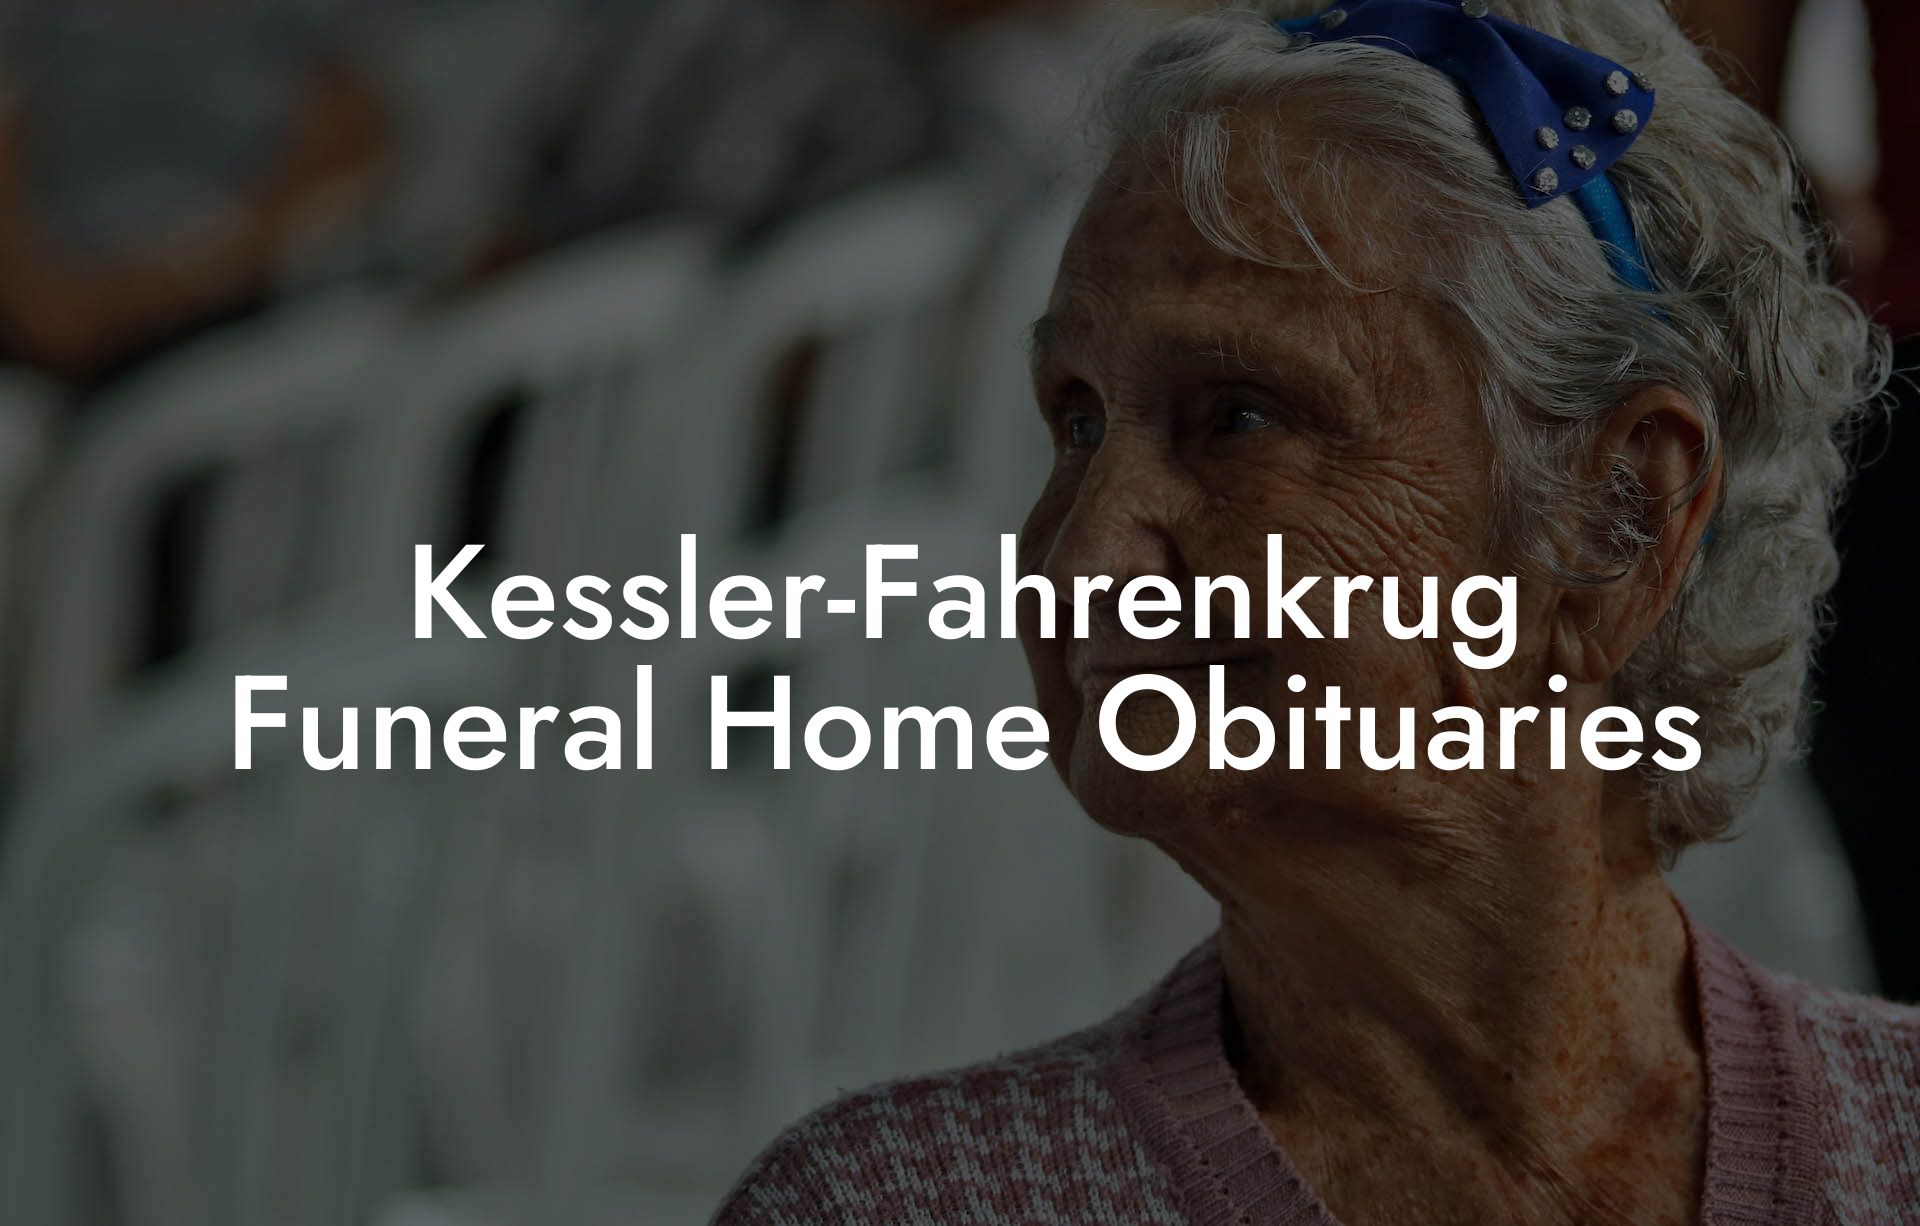 Kessler-Fahrenkrug Funeral Home Obituaries